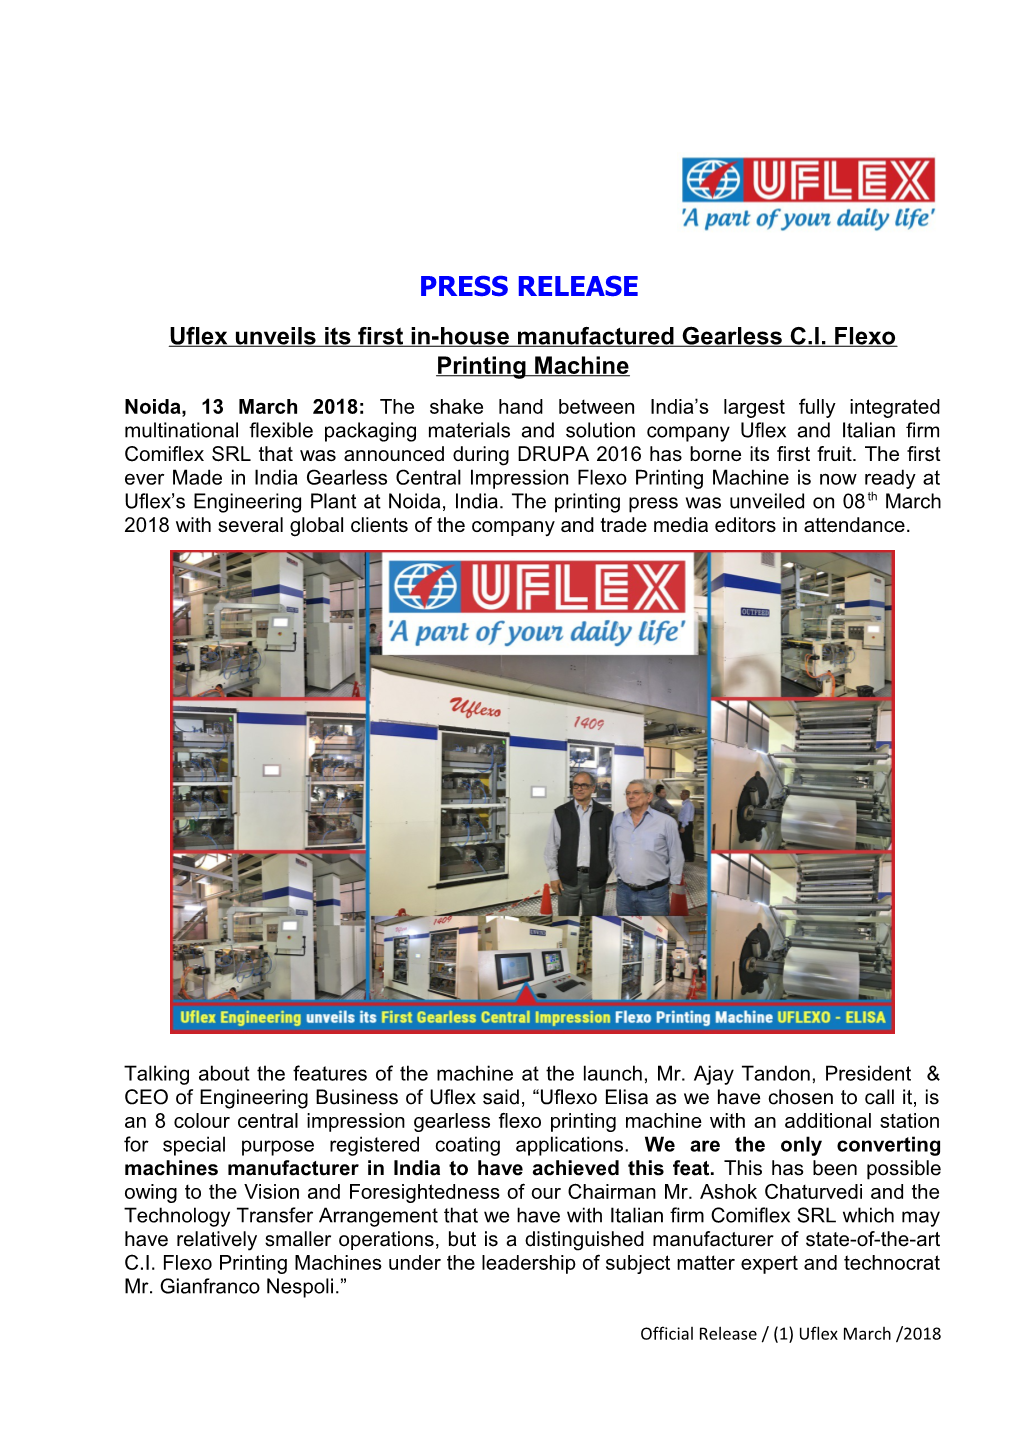 Uflex Unveils Its First In-House Manufactured Gearless C.I.Flexo Printing Machine